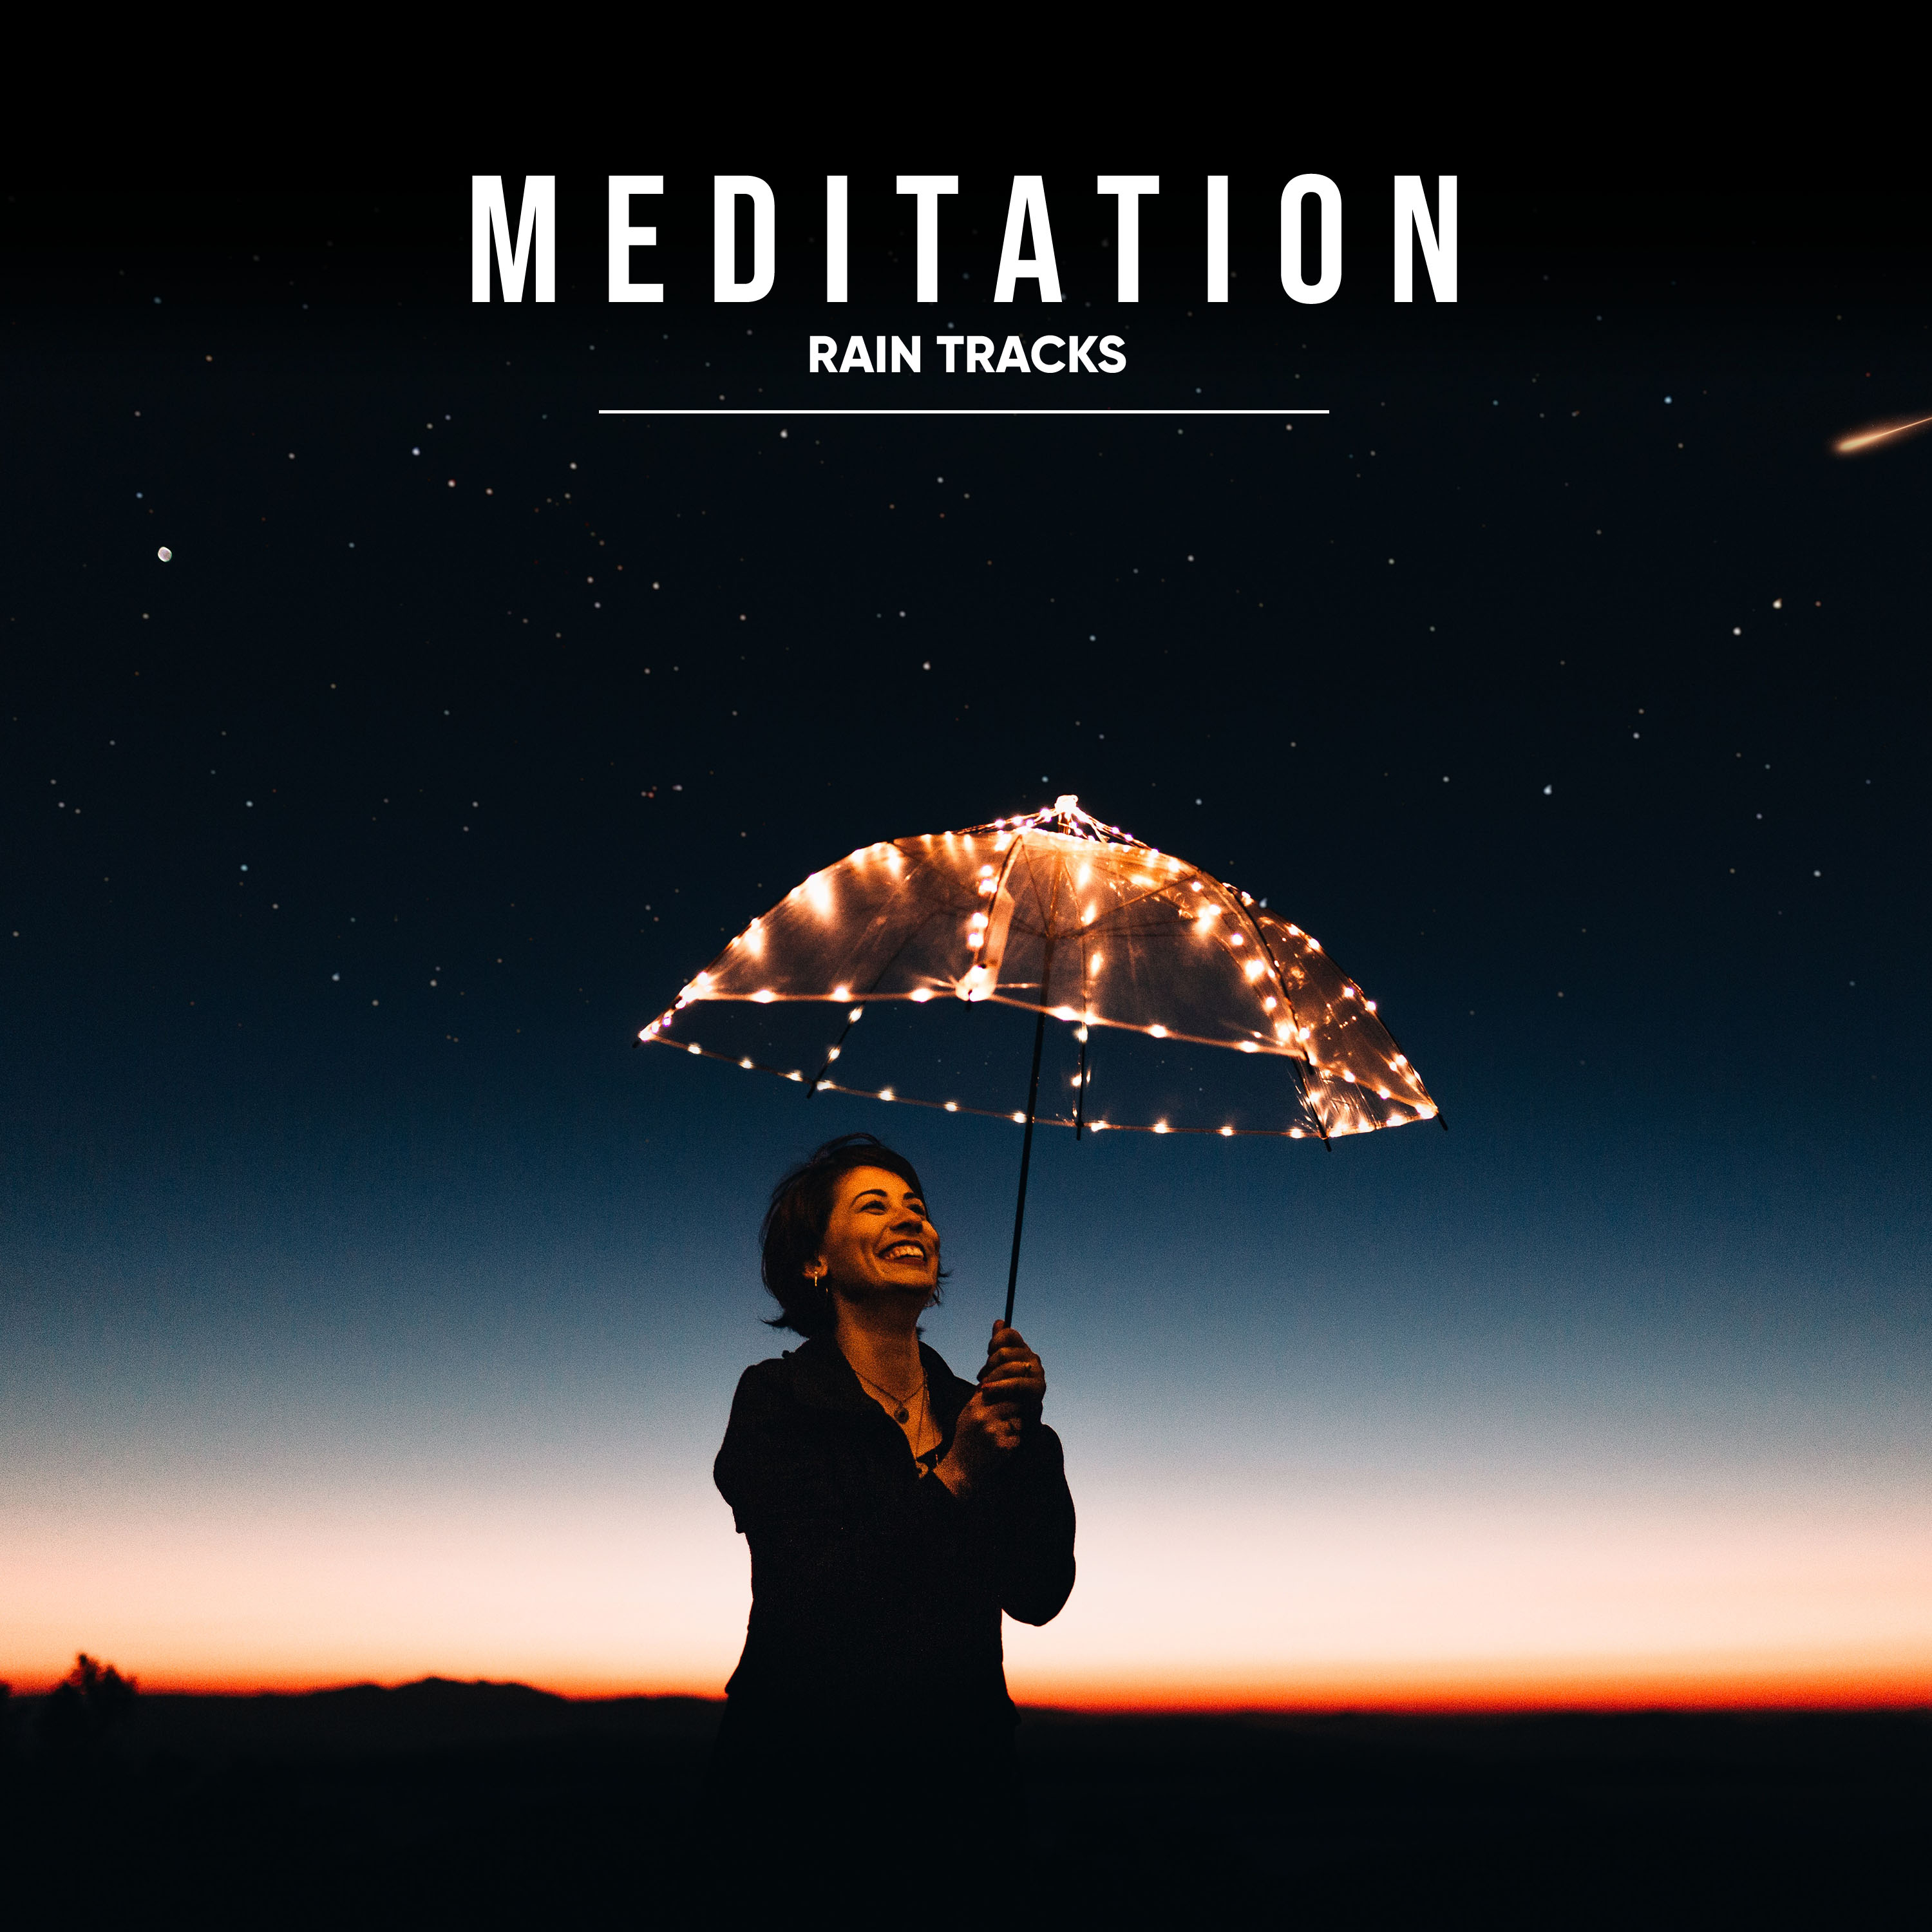 12 Meditation Rain Tracks to Calm the Mind